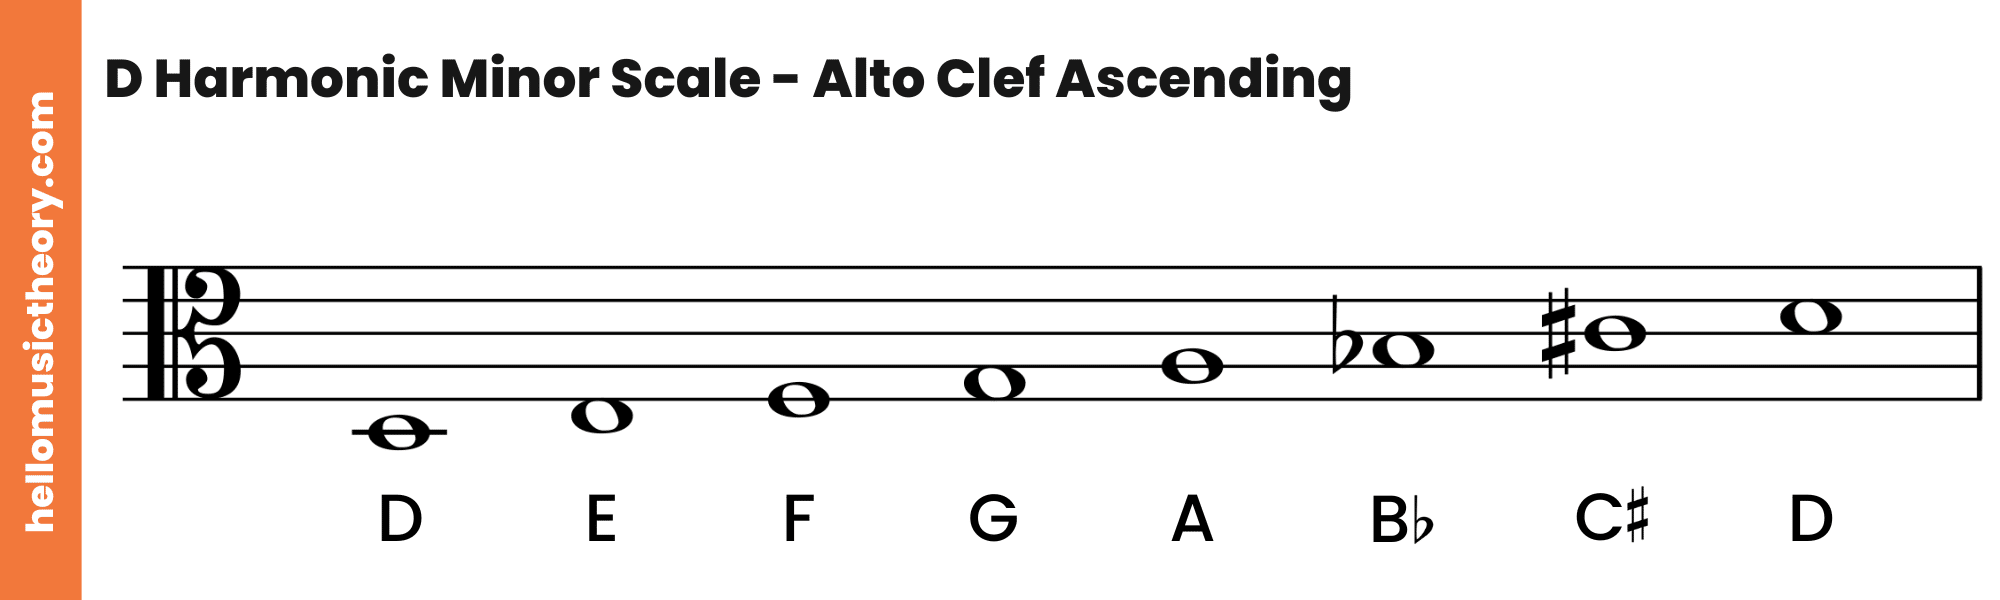 D Harmonic Minor Scale Alto Clef Ascending